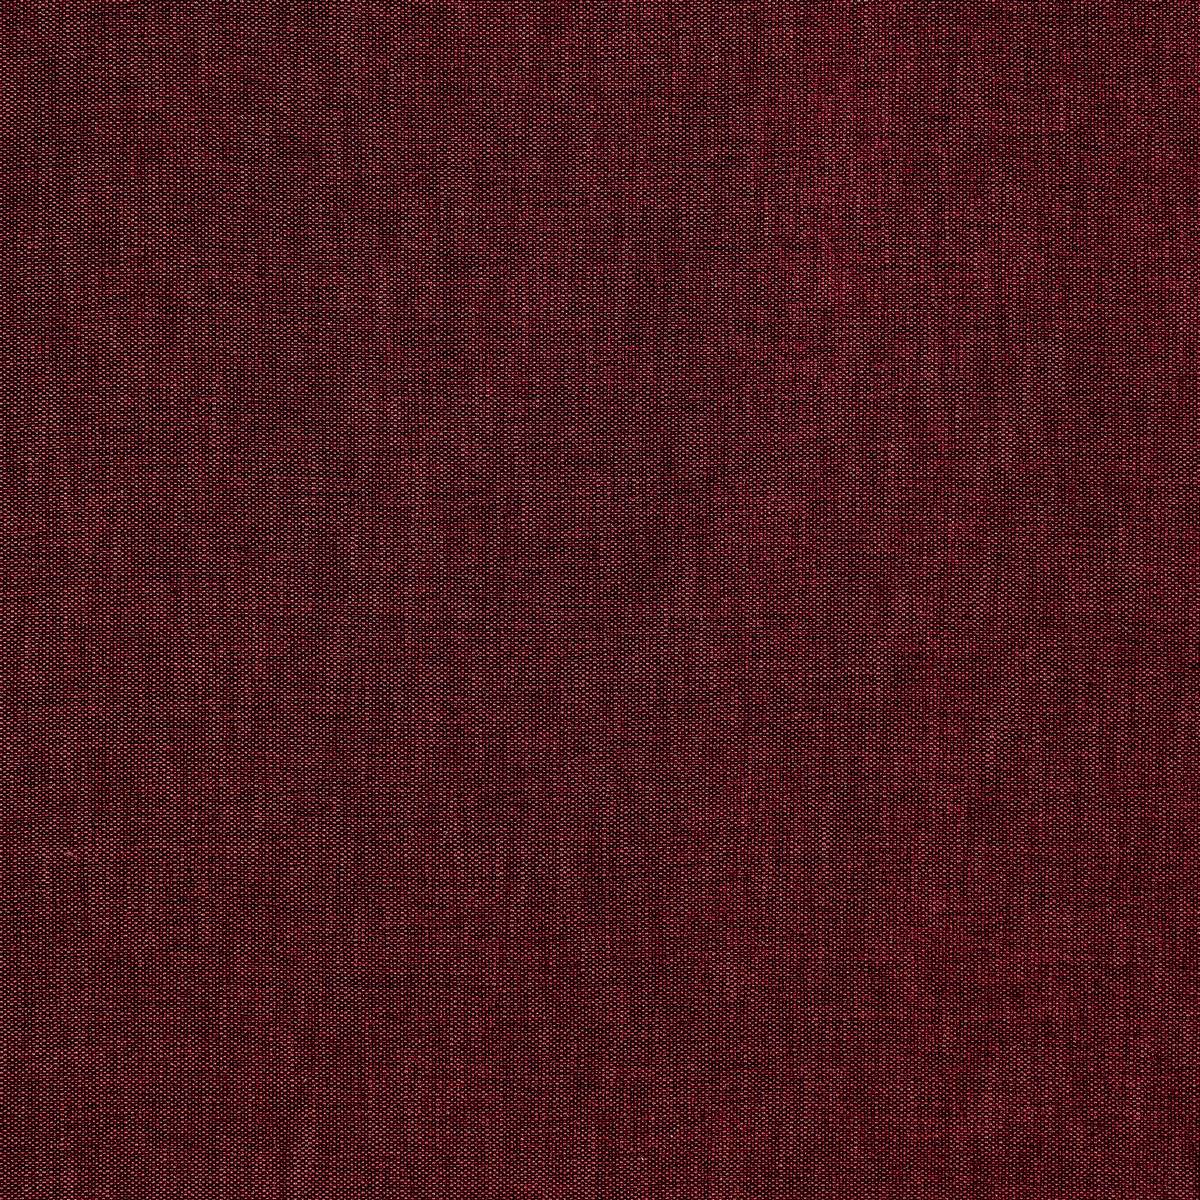 Nirvana Rosso Fabric by Fryetts